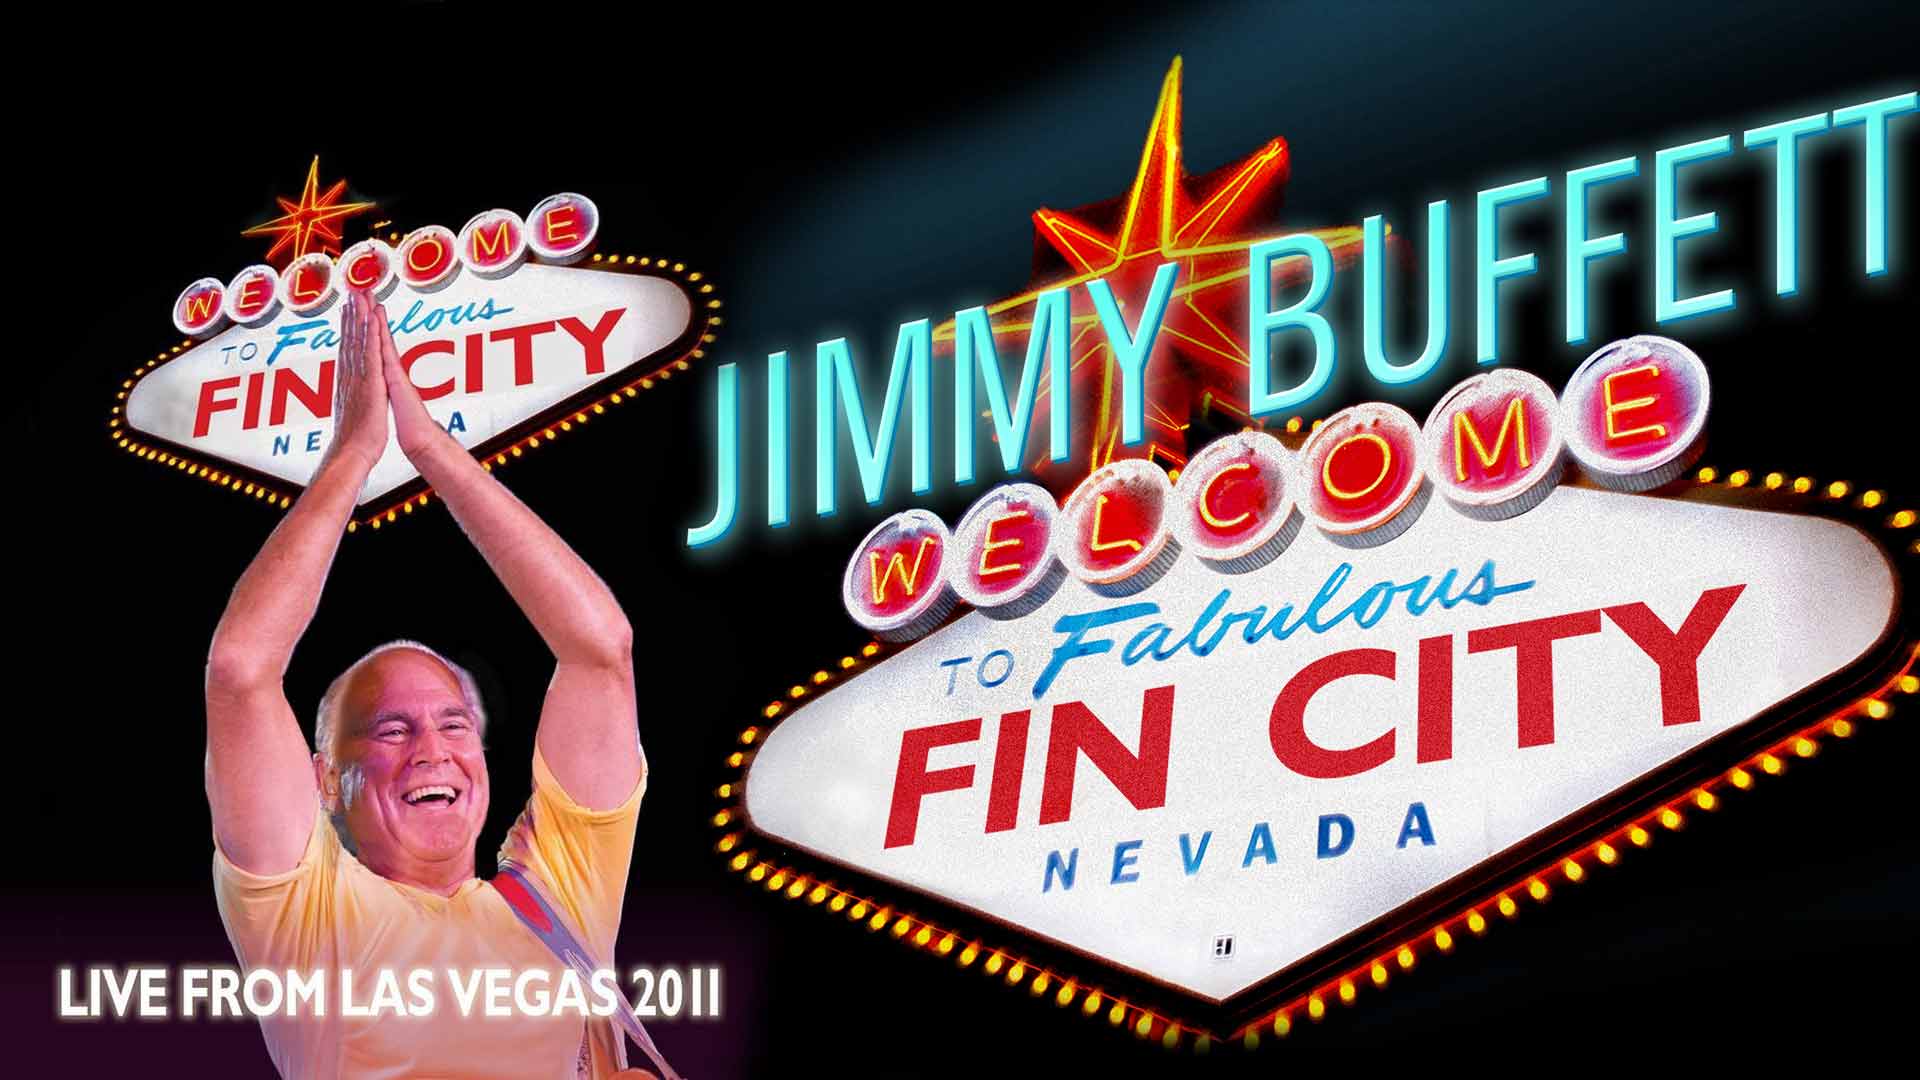 Jimmy Buffett: Welcome To Fin City